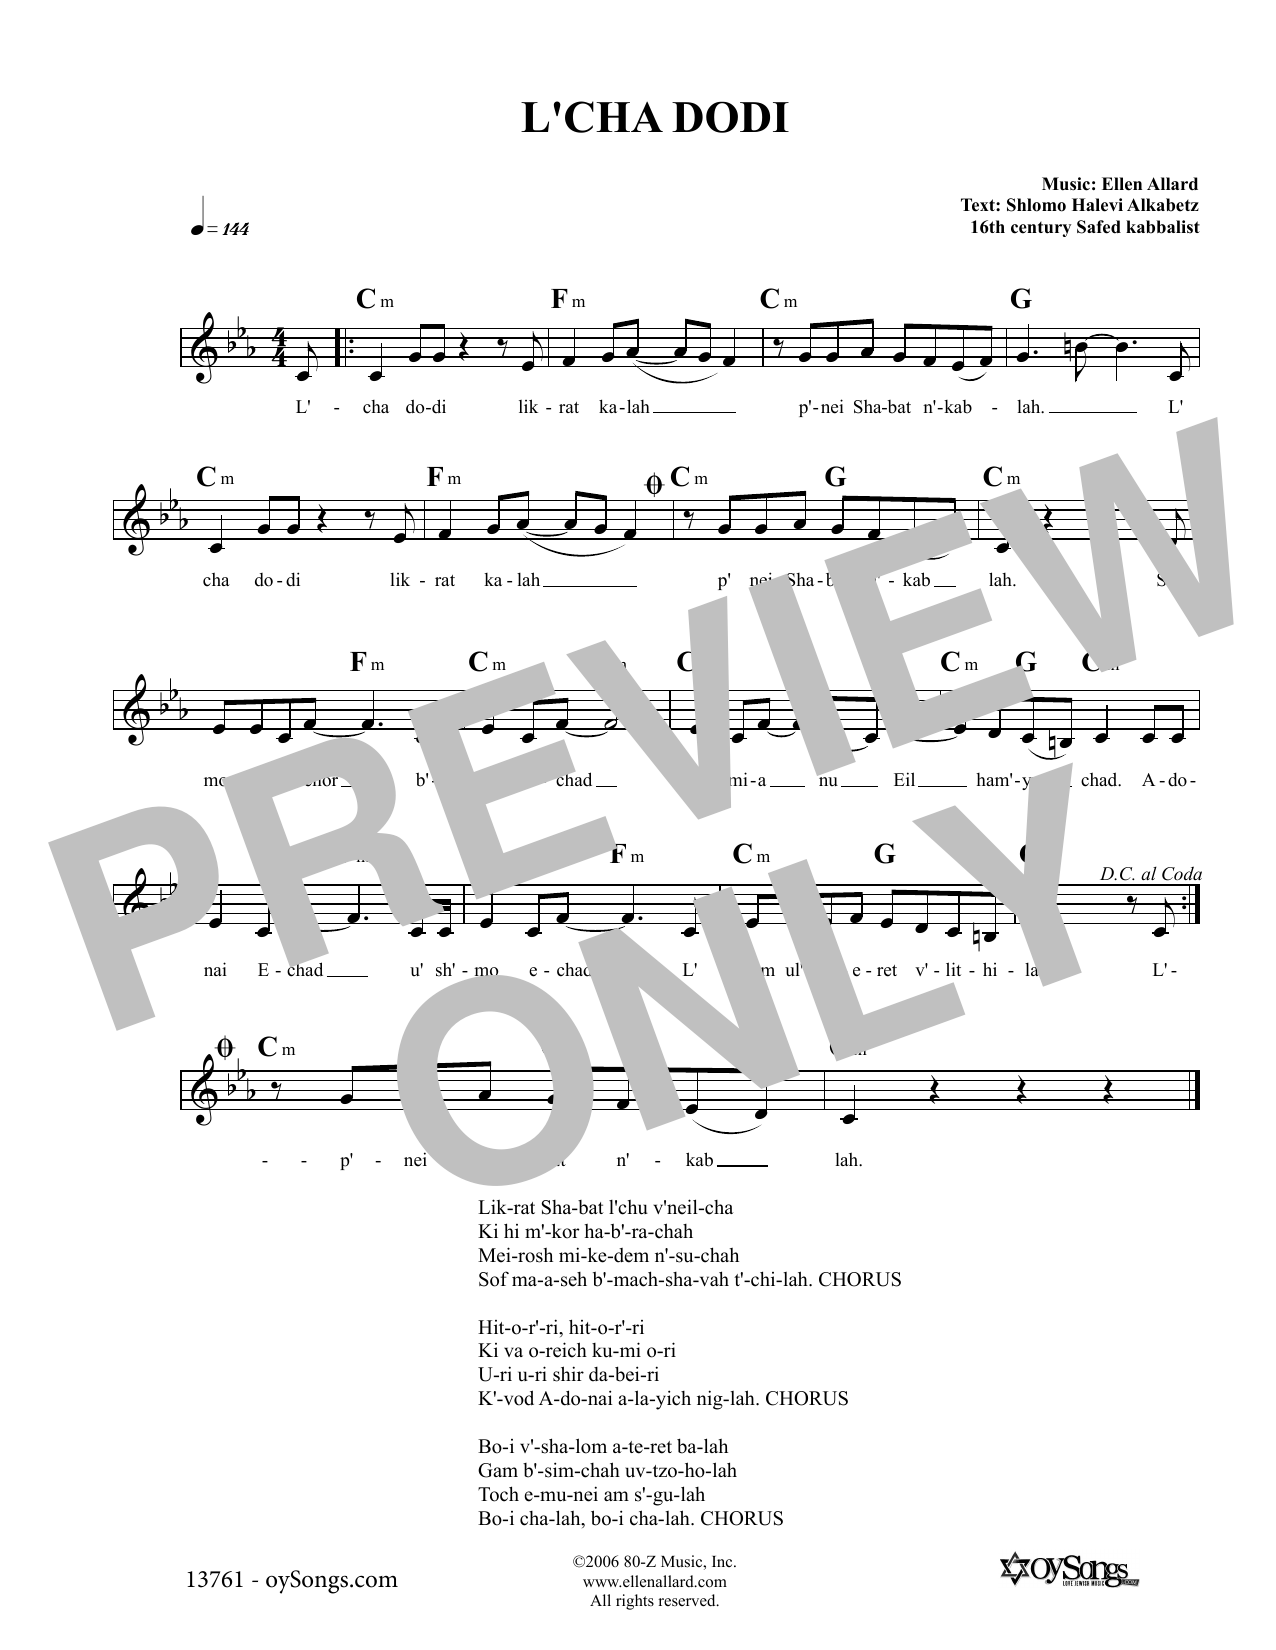 Ellen Allard L'cha Dodi Sheet Music Notes & Chords for Melody Line, Lyrics & Chords - Download or Print PDF